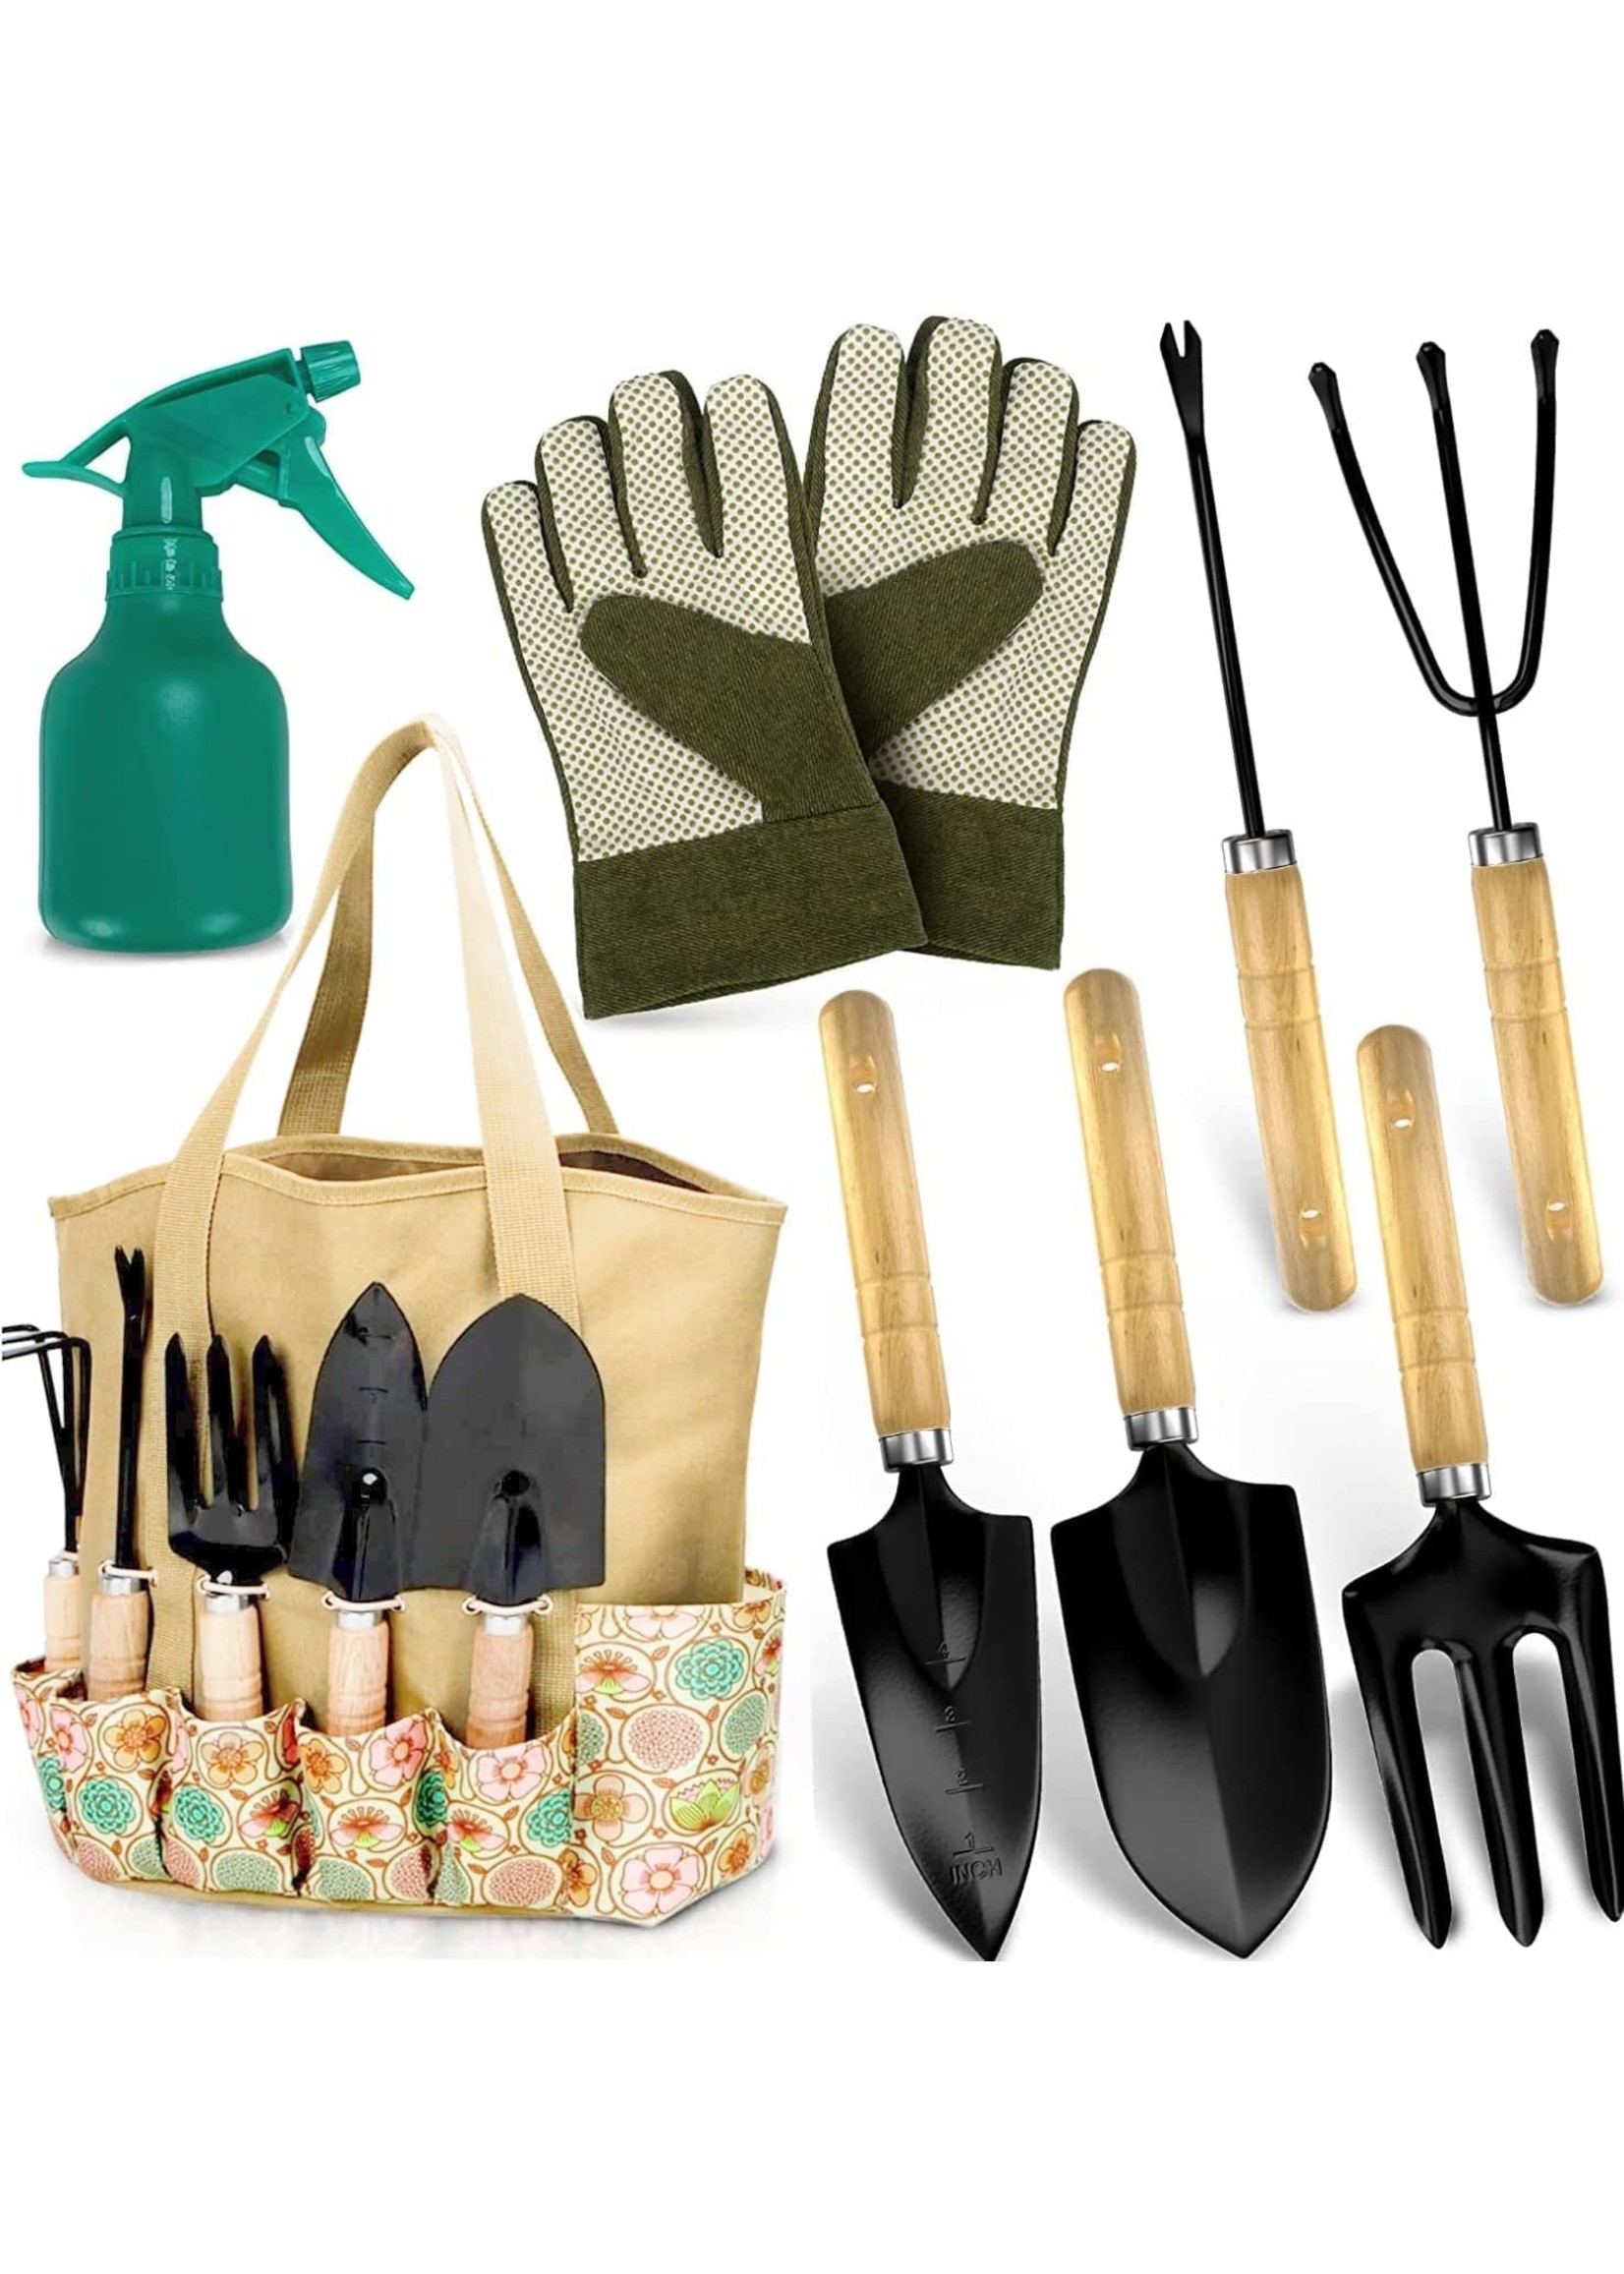 TIA MARIA Scuddles - Garden Tools Set - 8 Piece Gardening Tools with Storage Organizer,